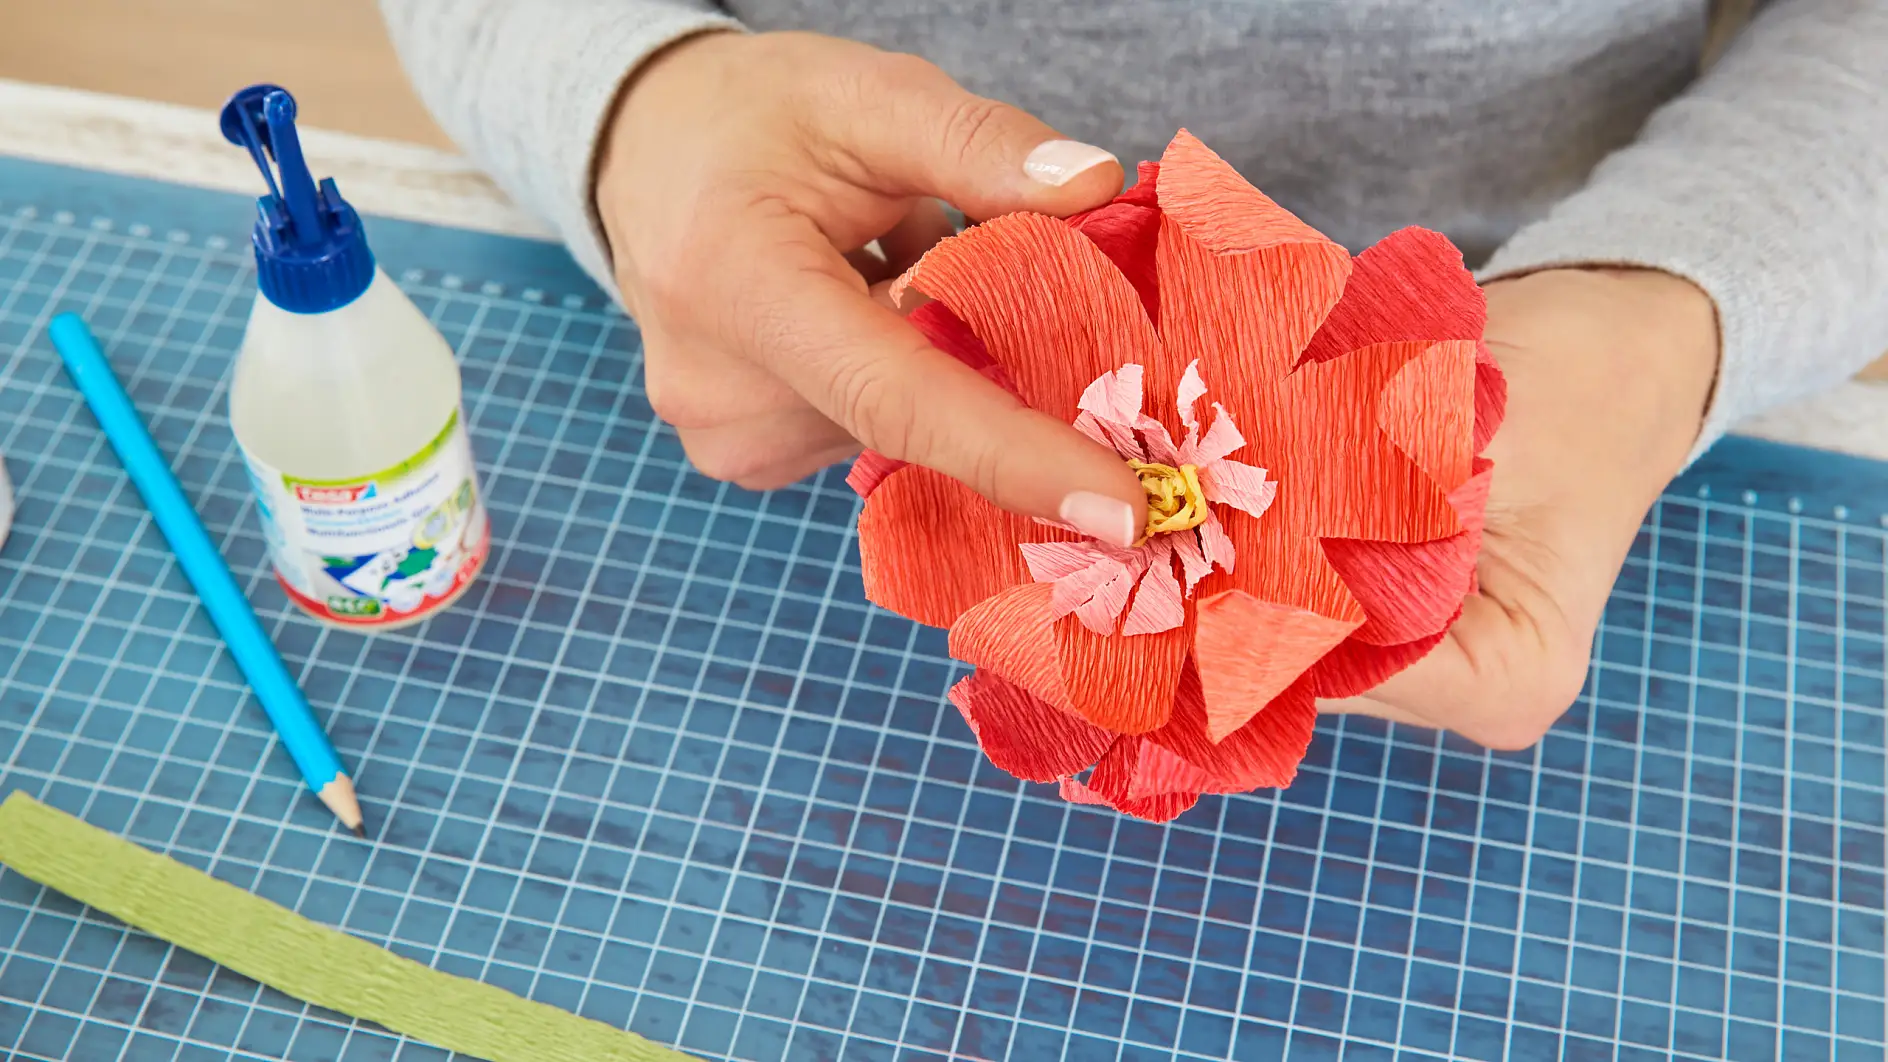 DIY Paper Flower / Step 7: Make small cuts